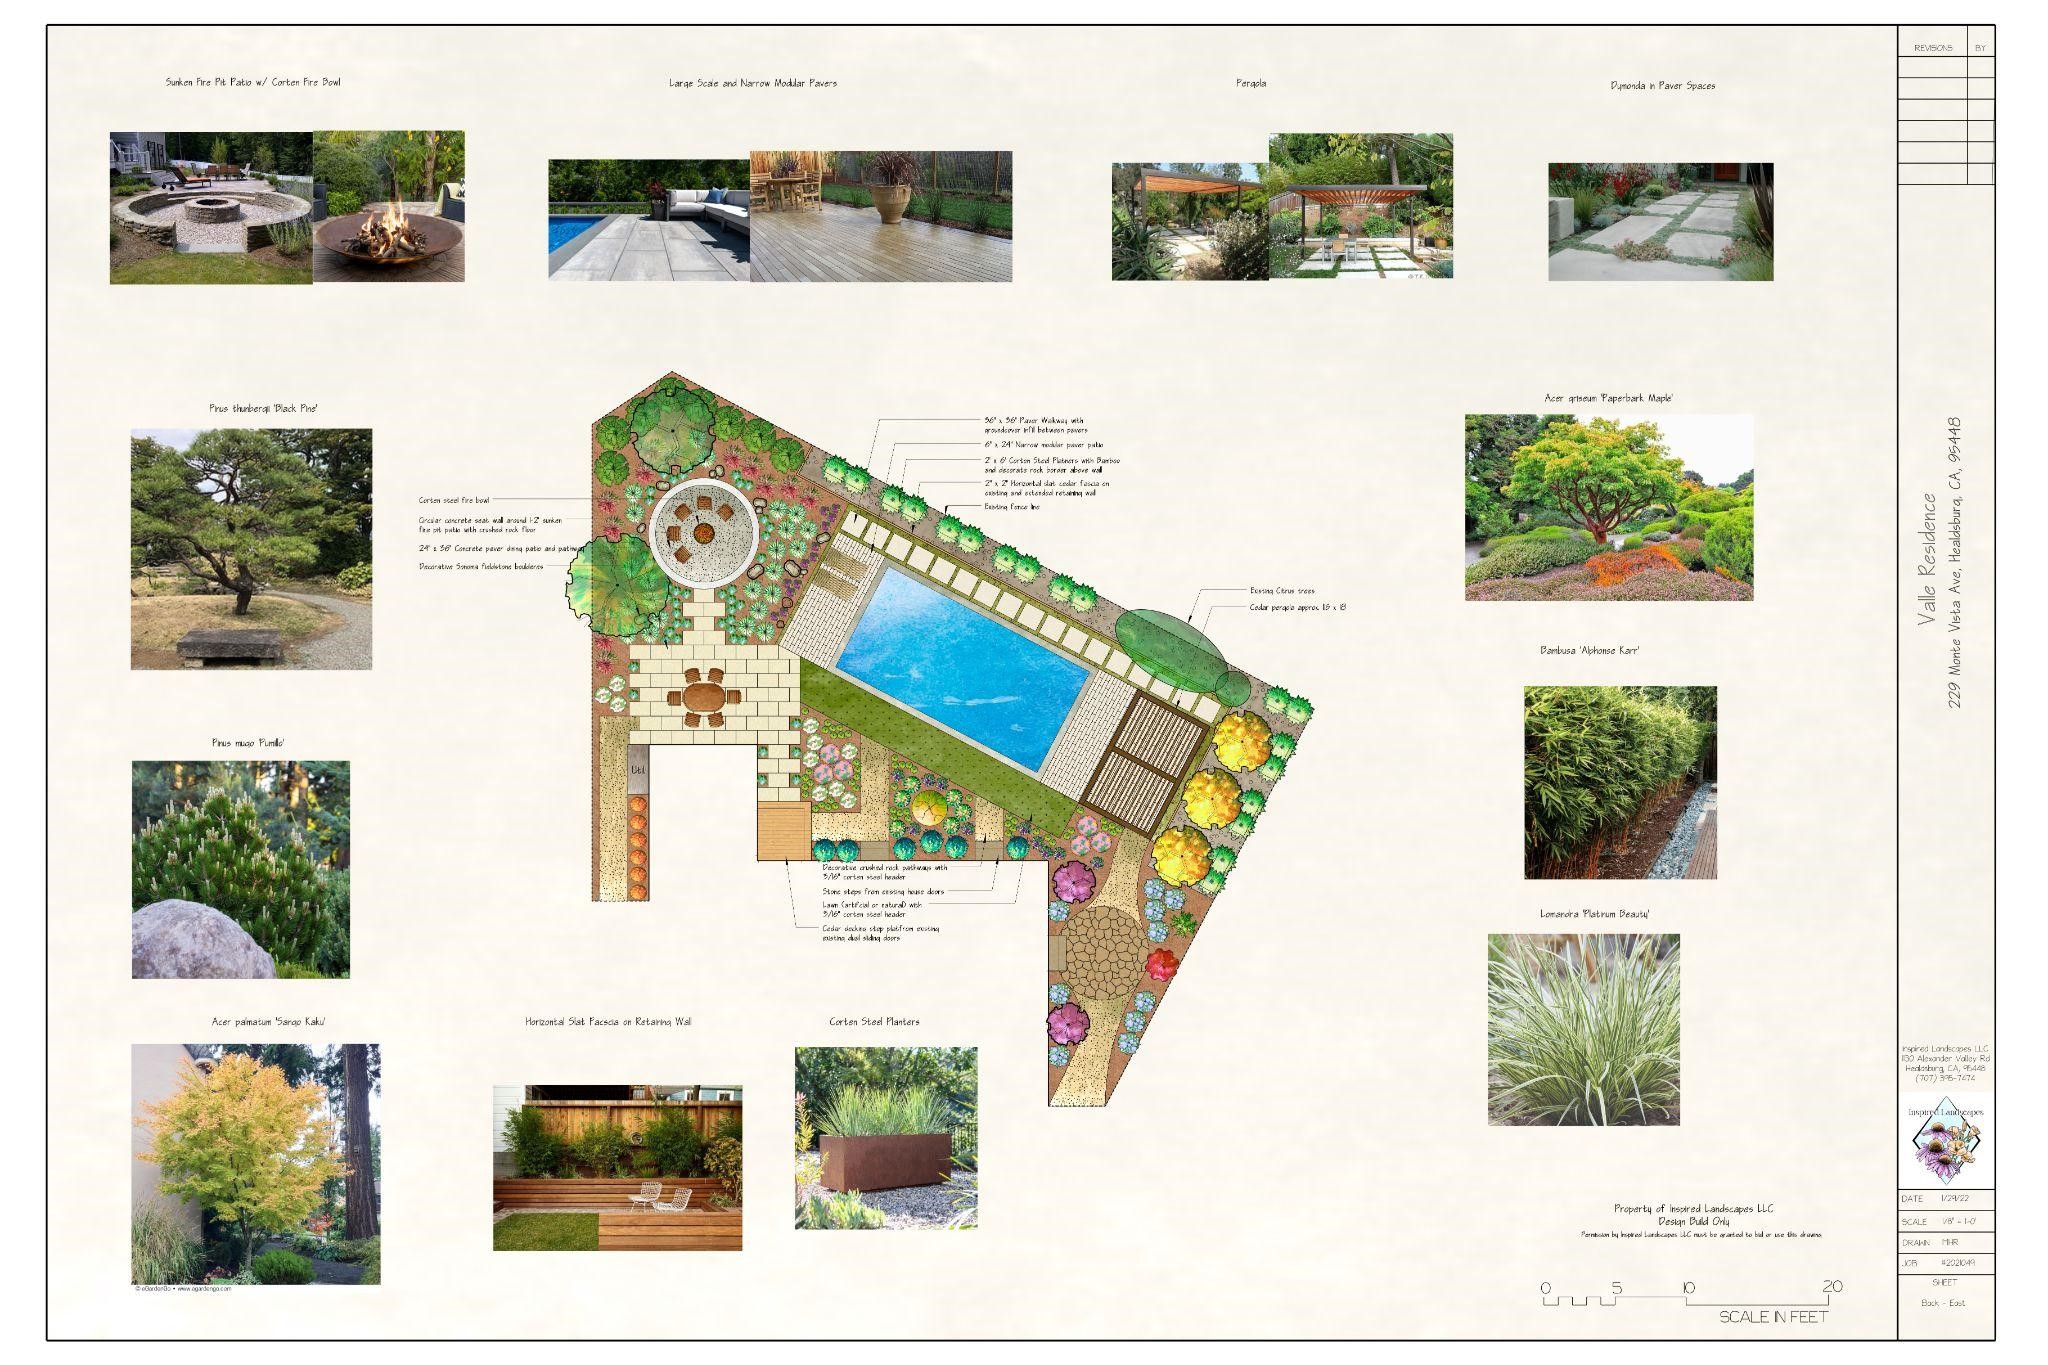 Design Plans And Blueprint Of A Landscape Of A Garden